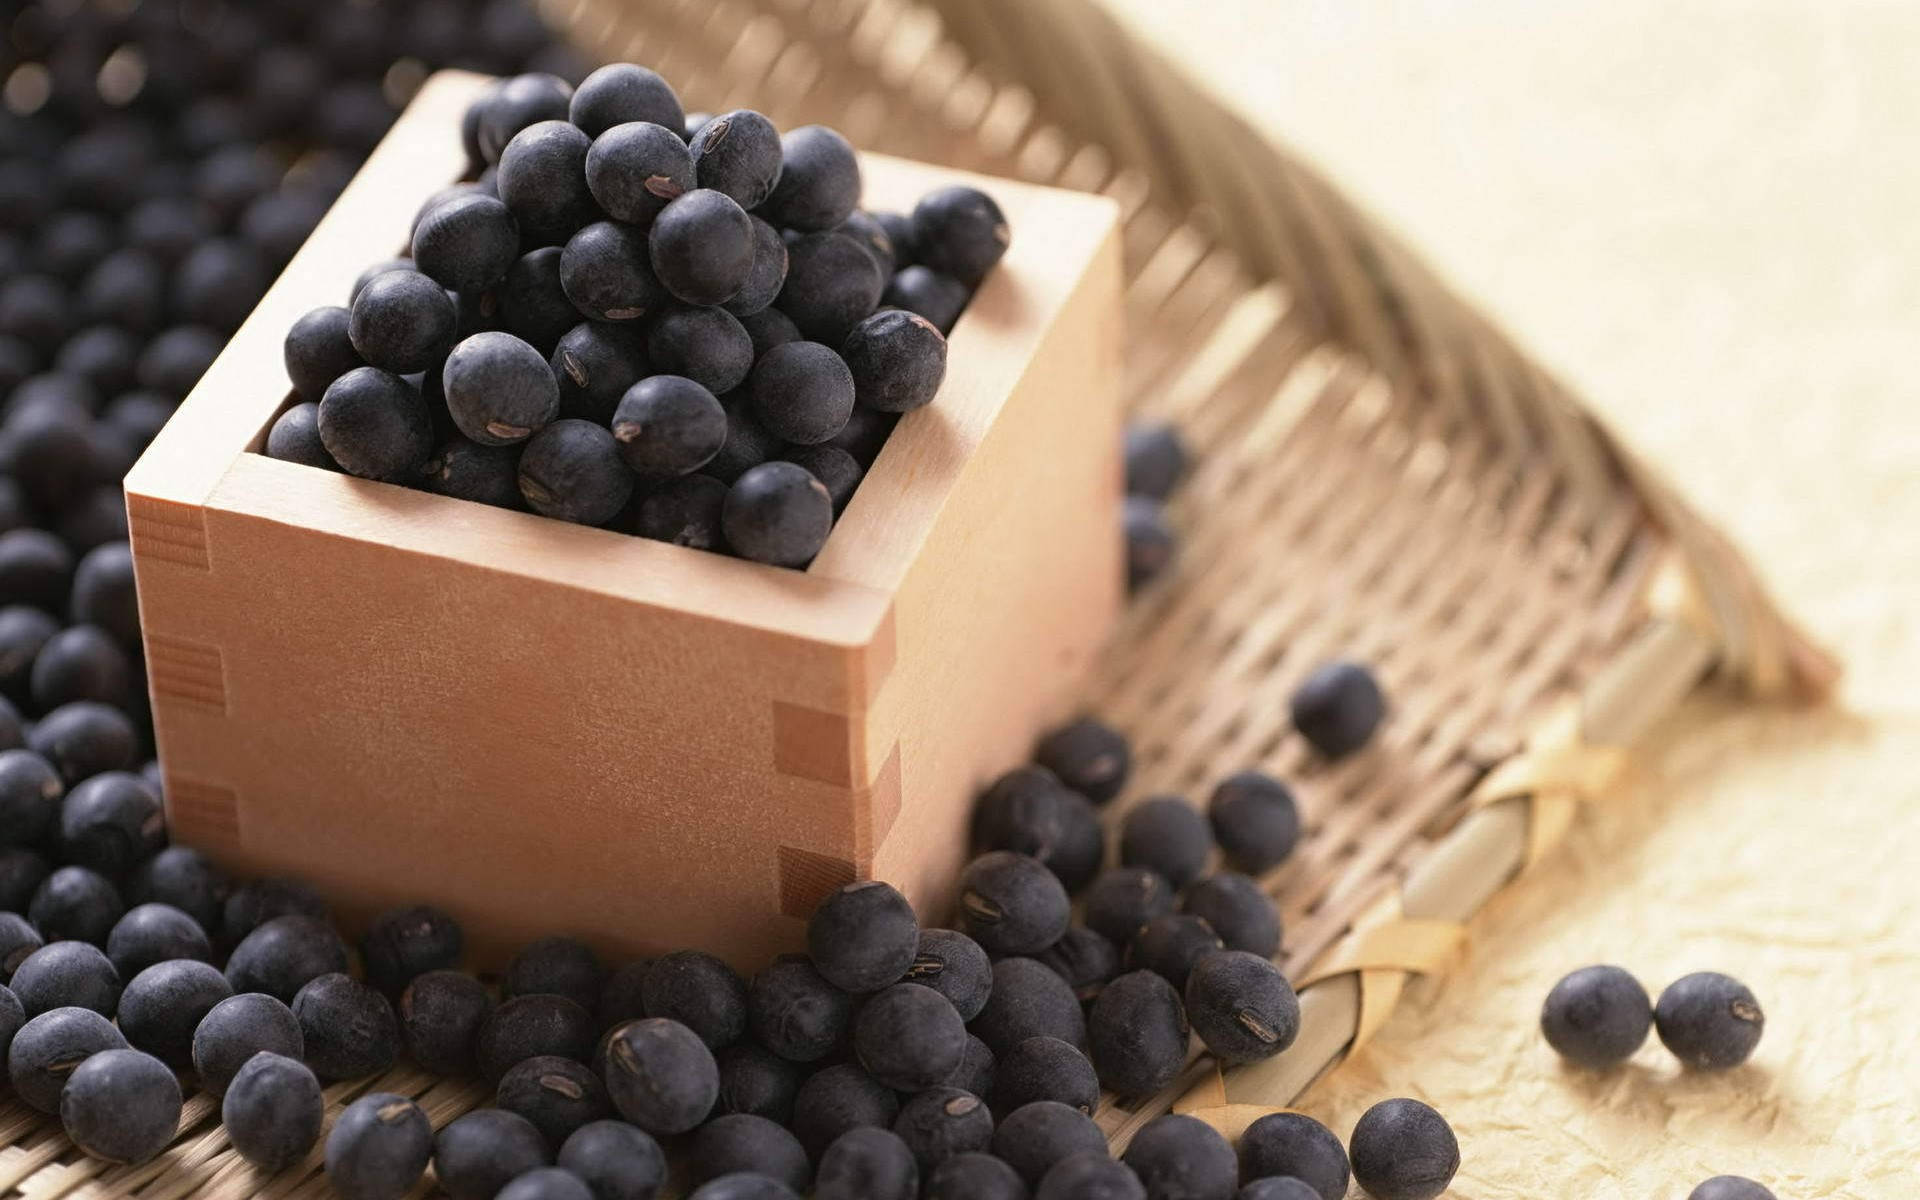 Square Sake Box Of Blueberries Background